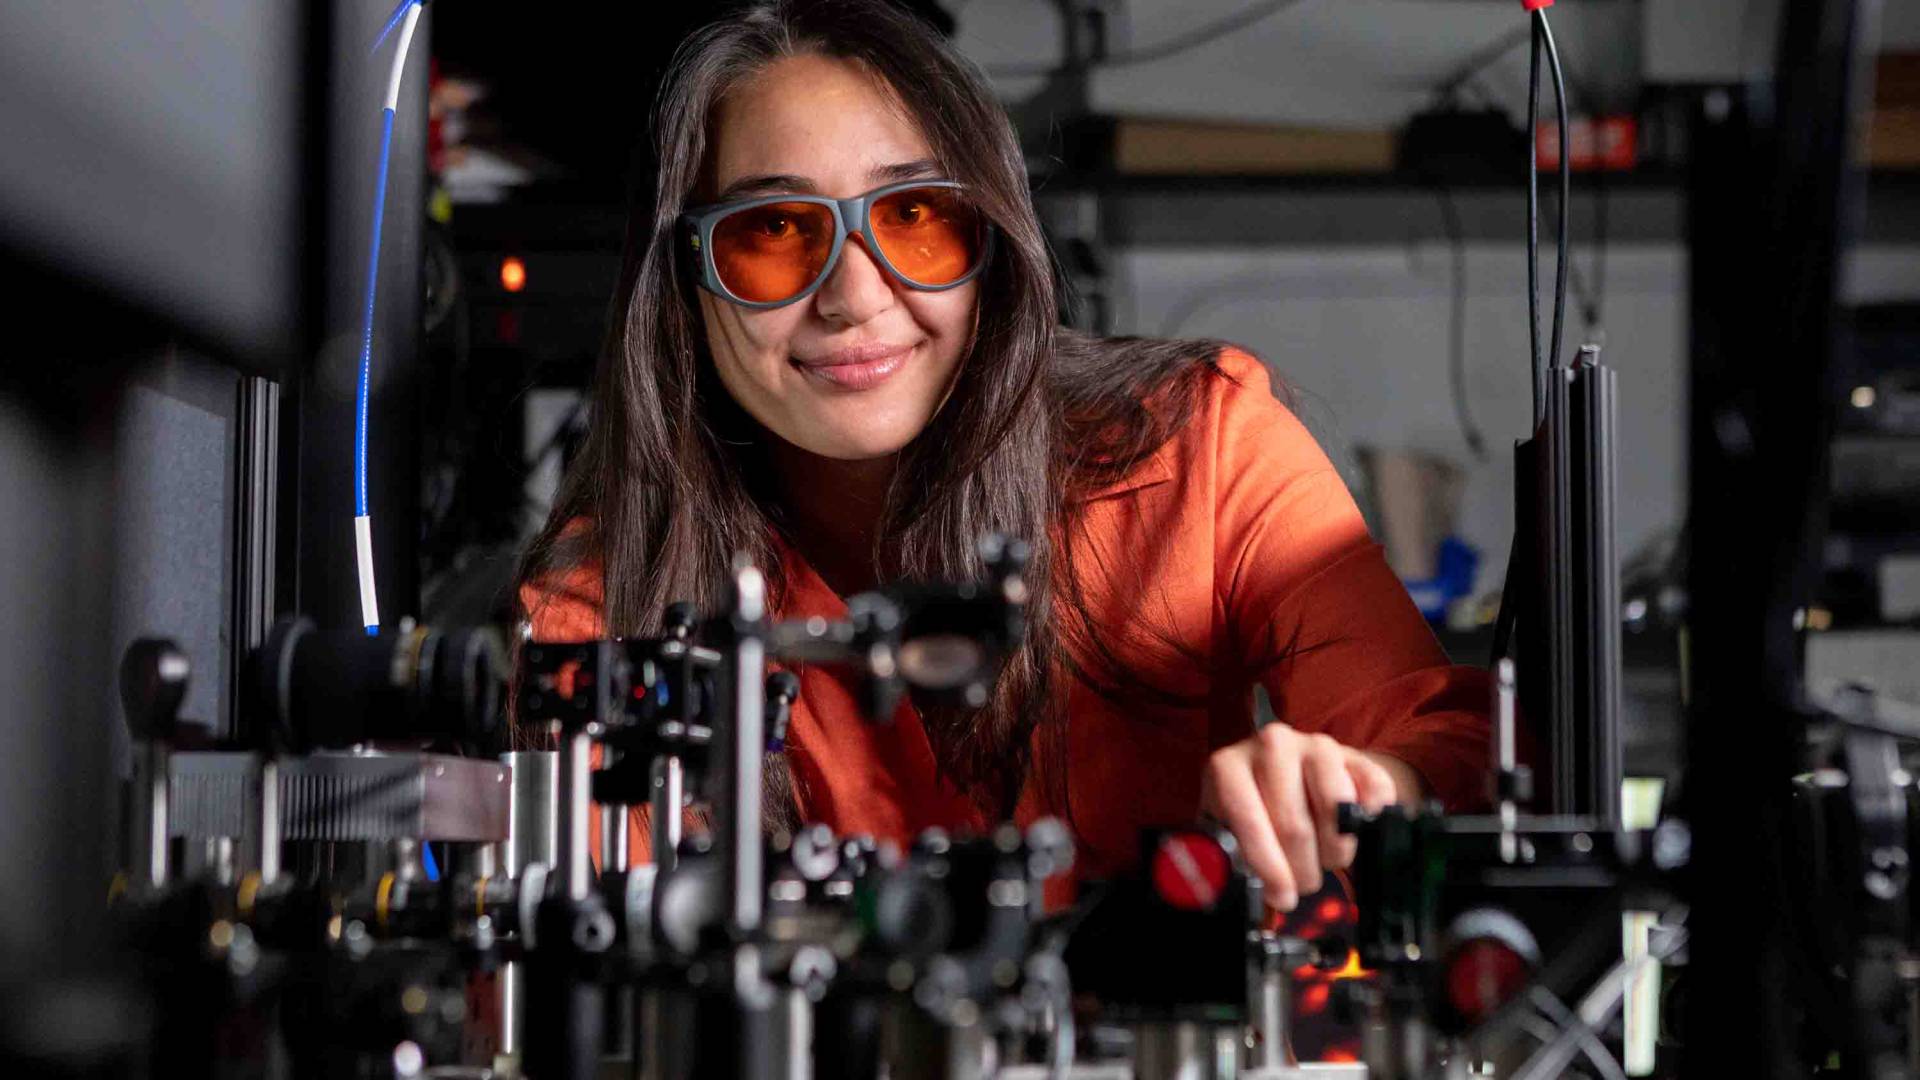 Elisabeth Rülke smiling in a lab with goggles.